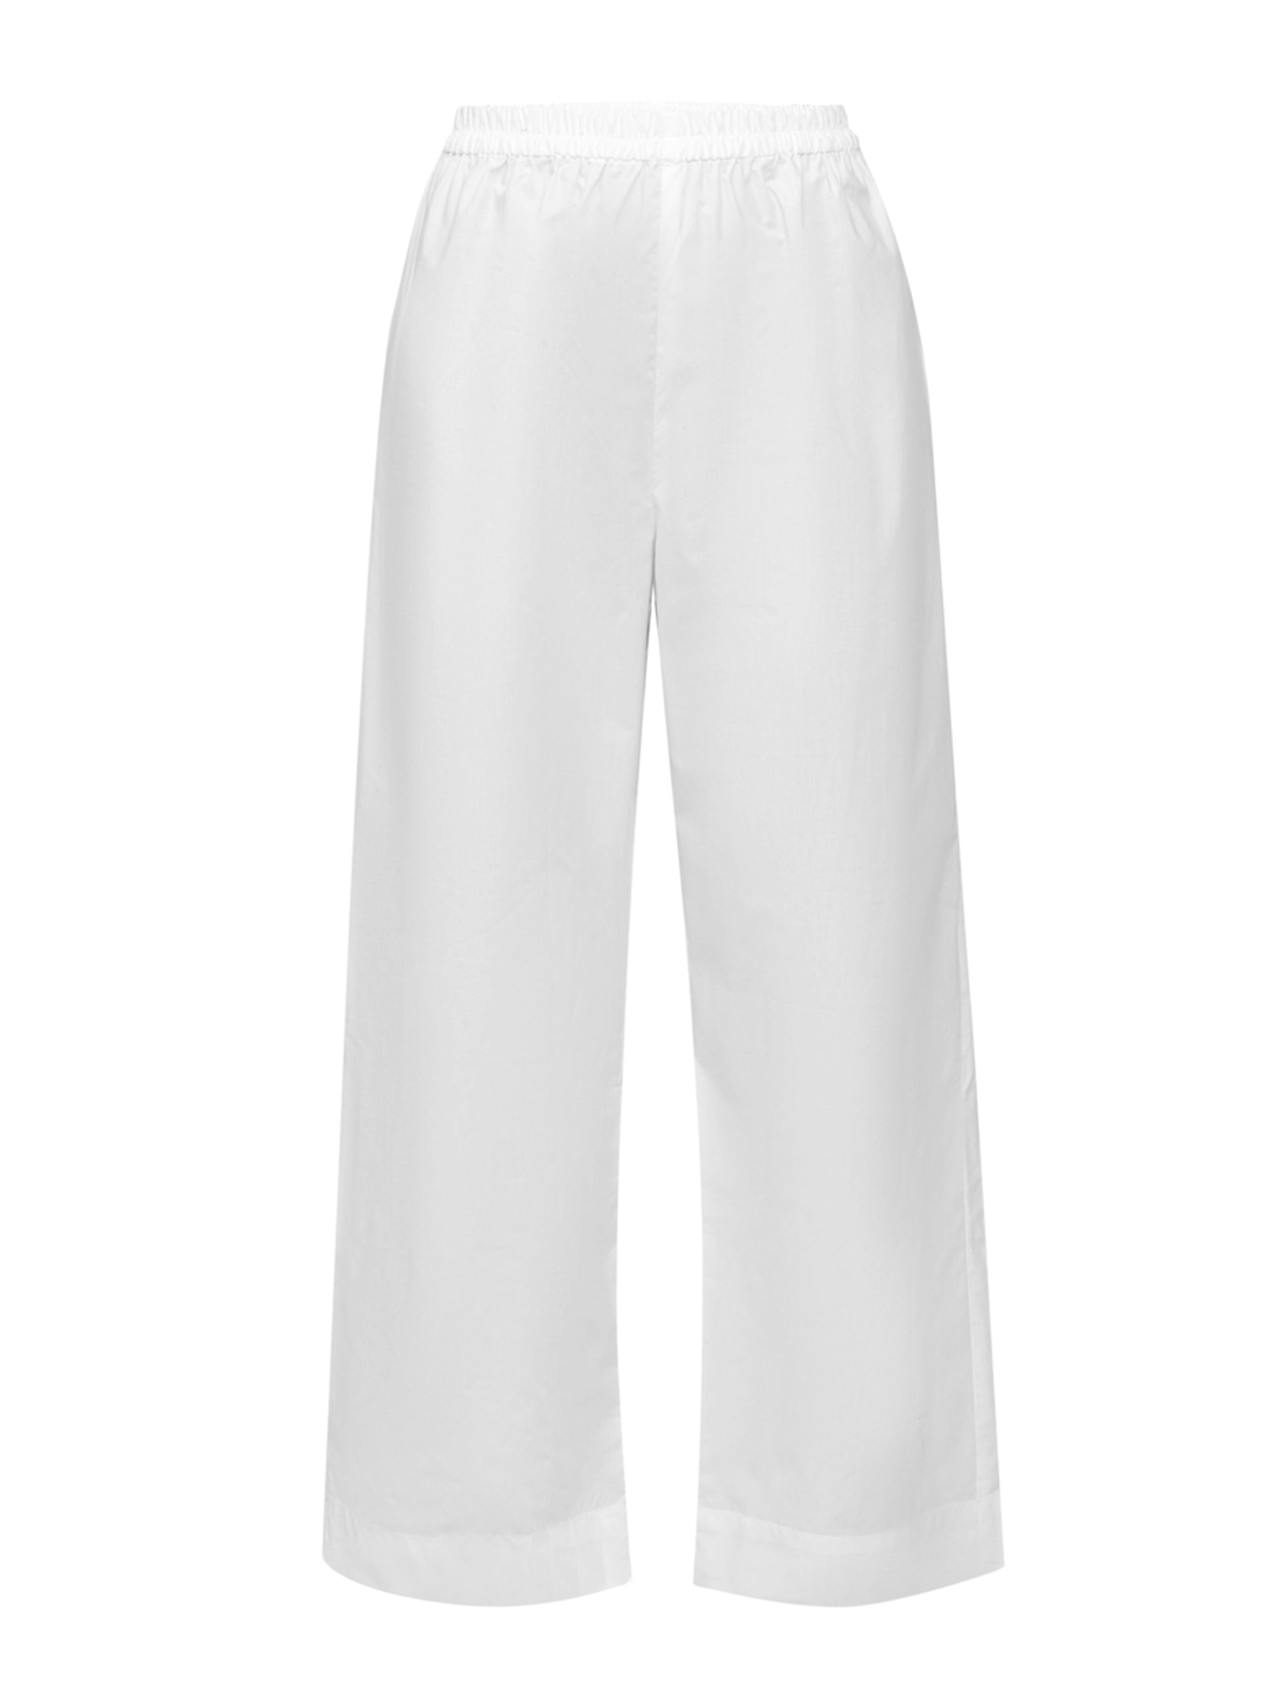 White cotton poplin trousers